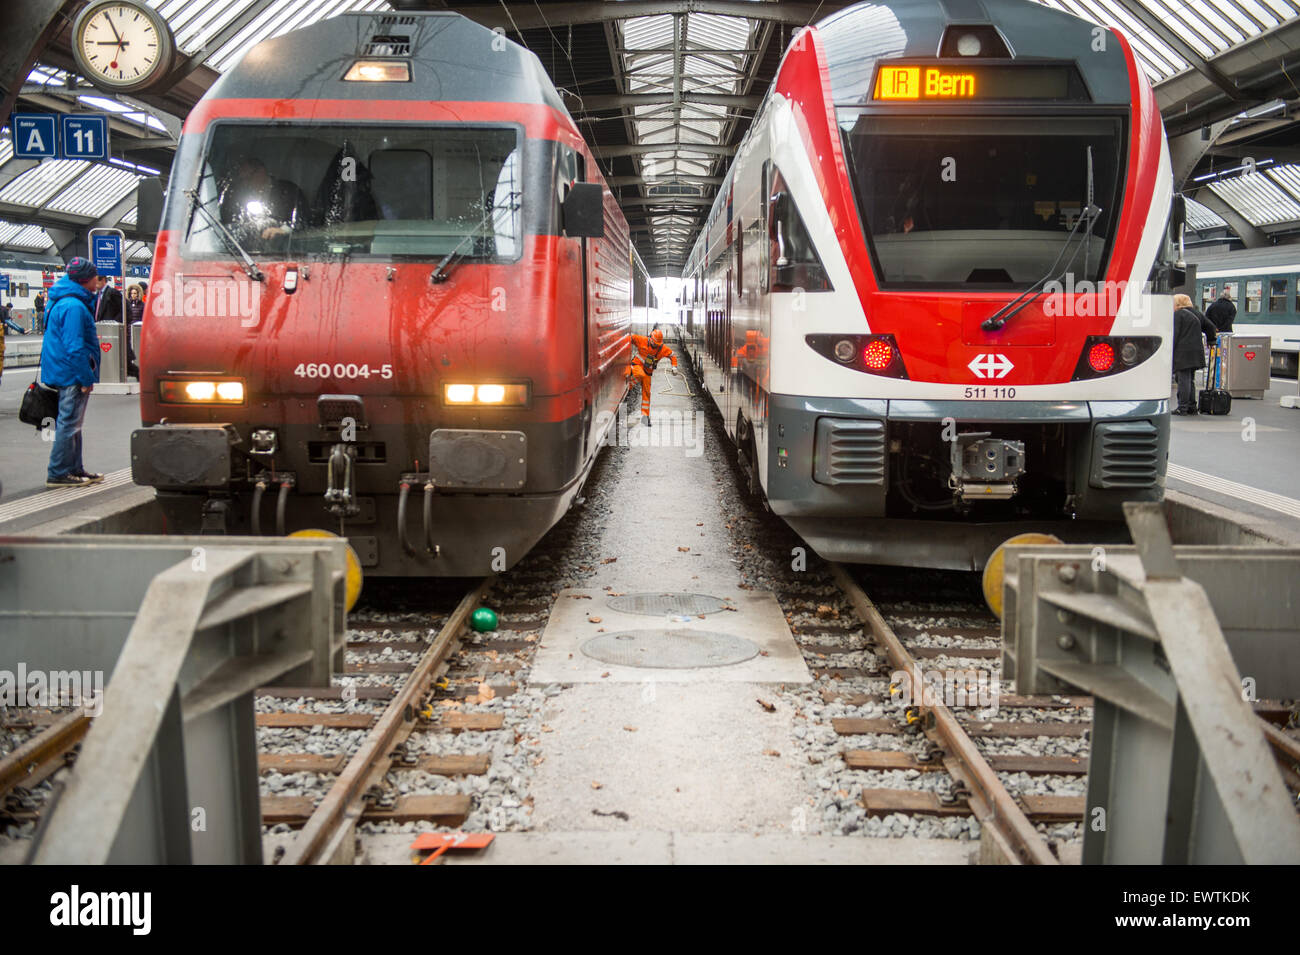 Trains at the train station in Zurich Switzerland, Europe Stock Photo